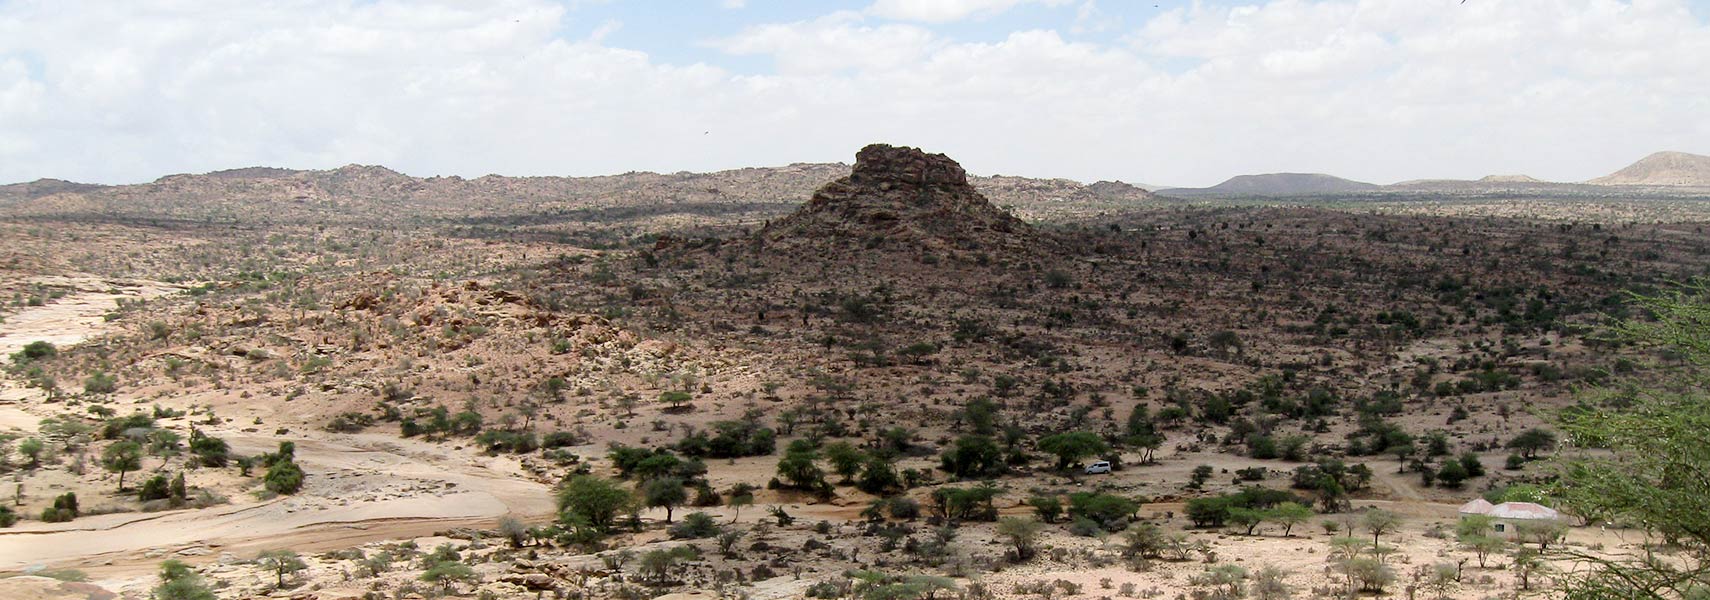 Landscape in northern Somalia